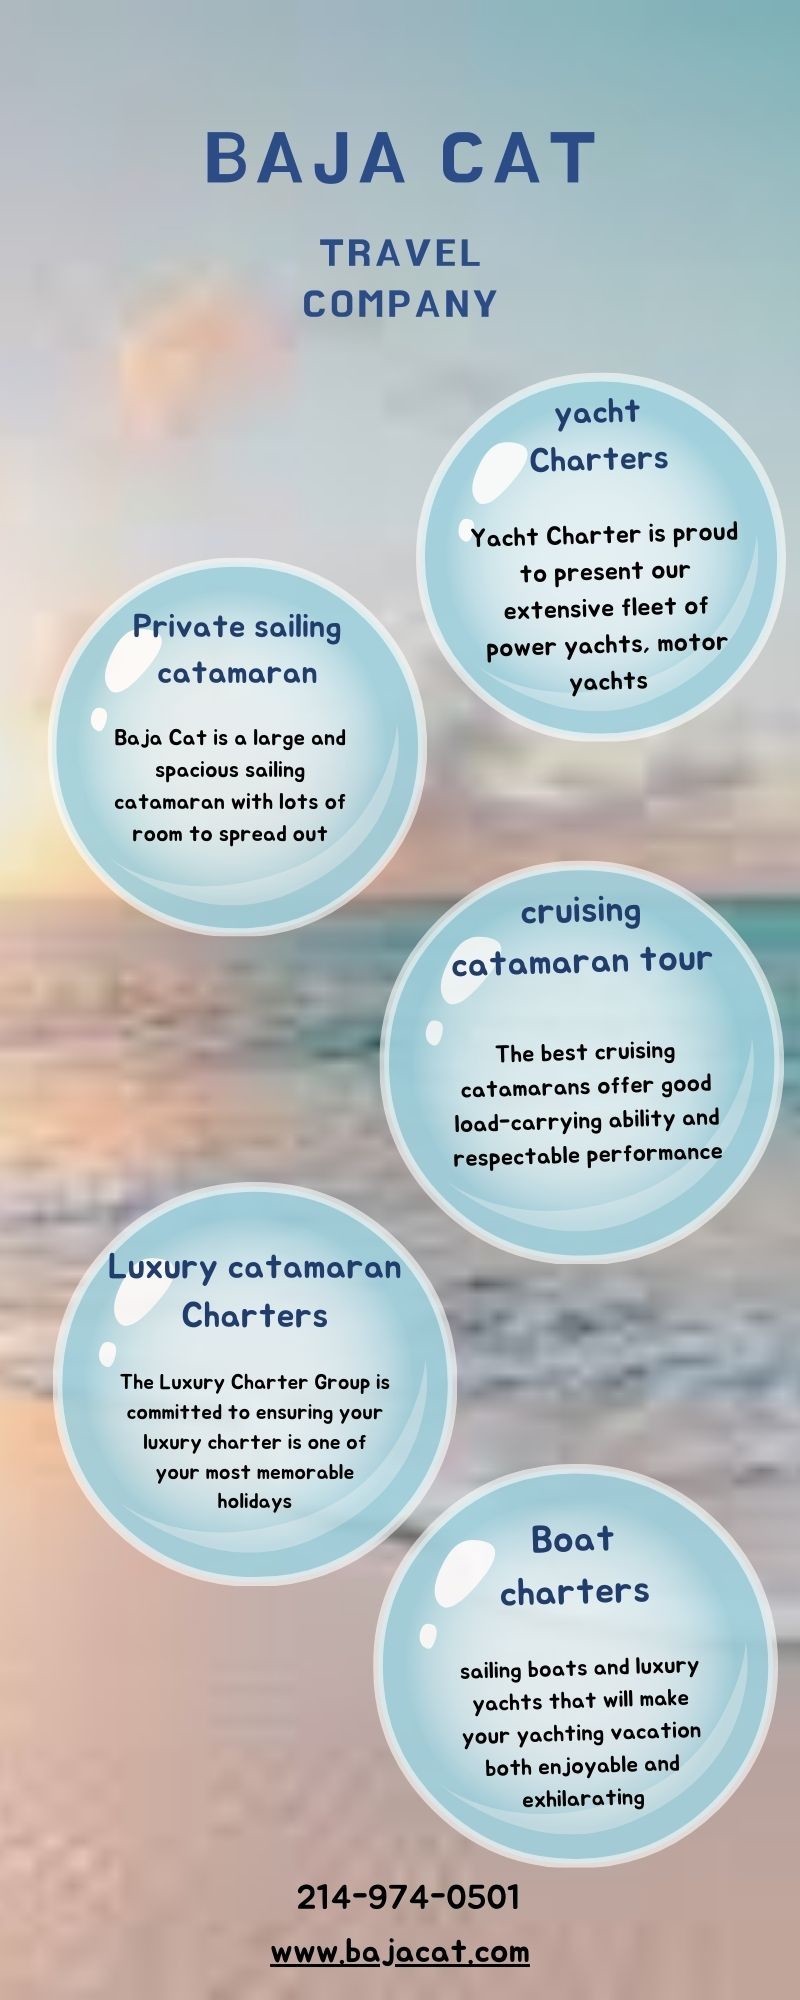 Luxury Vacation Sailing Catamaran La Paz: The Journey of Adventure